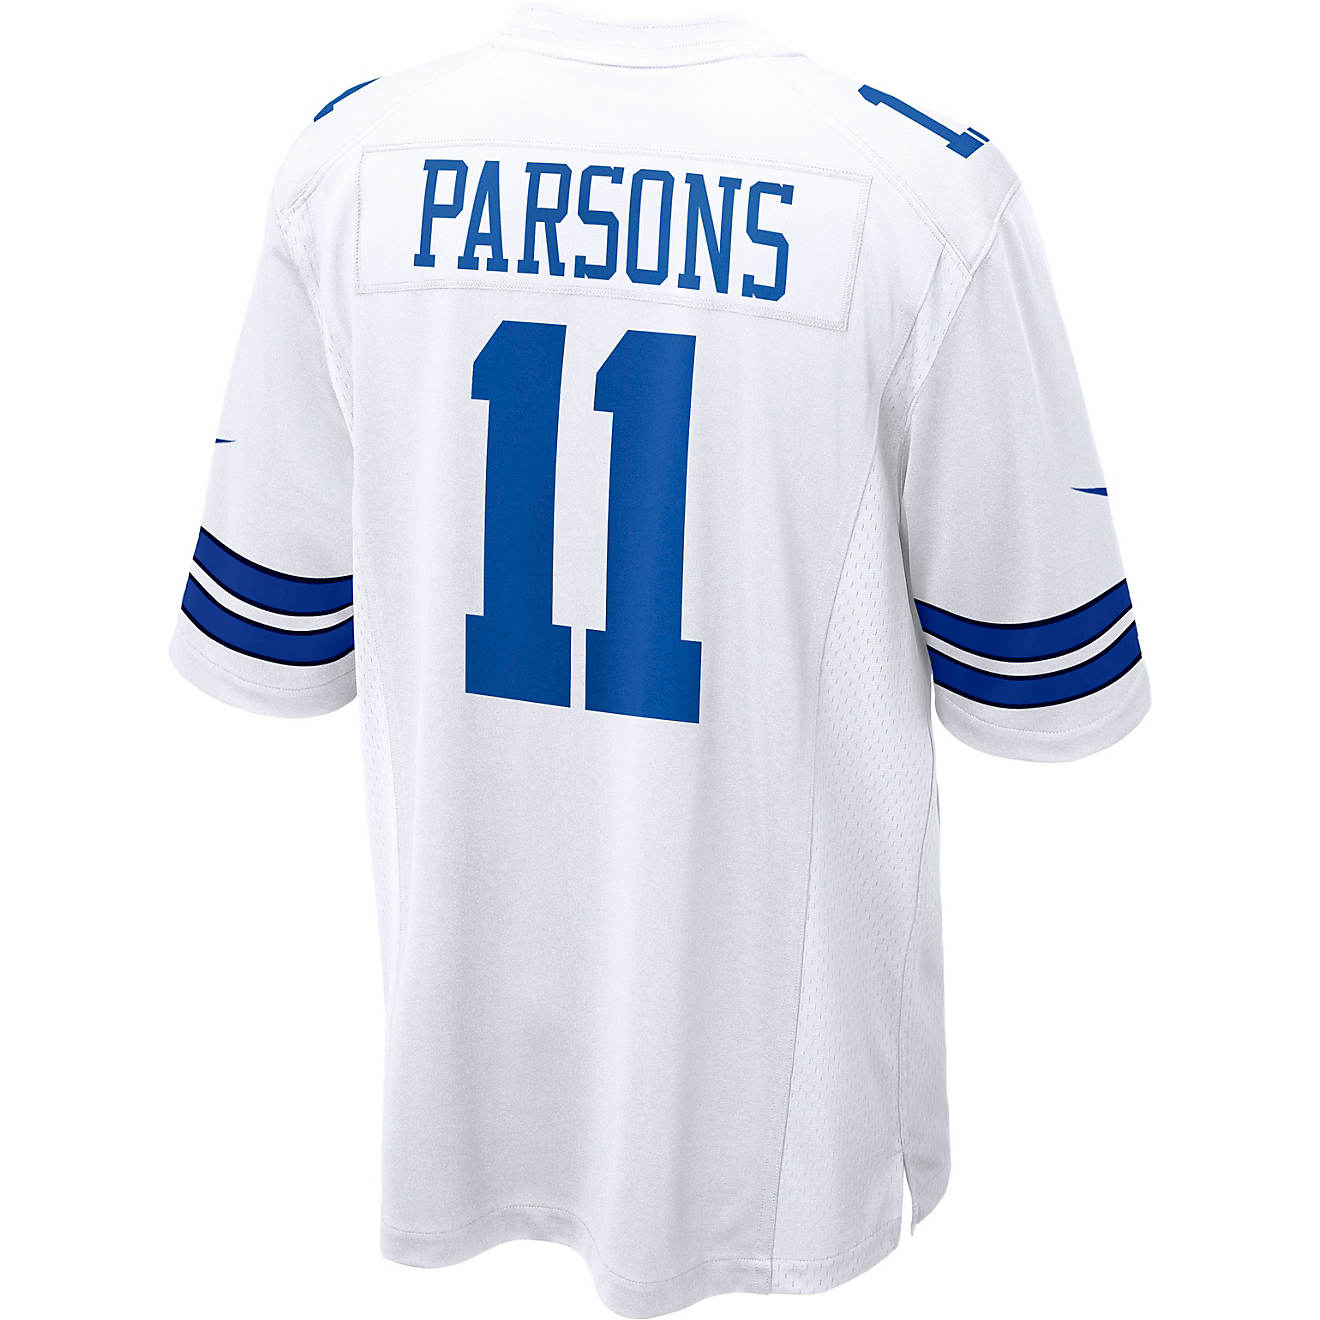 Nike Men's Dallas Cowboys Parsons Game Jersey